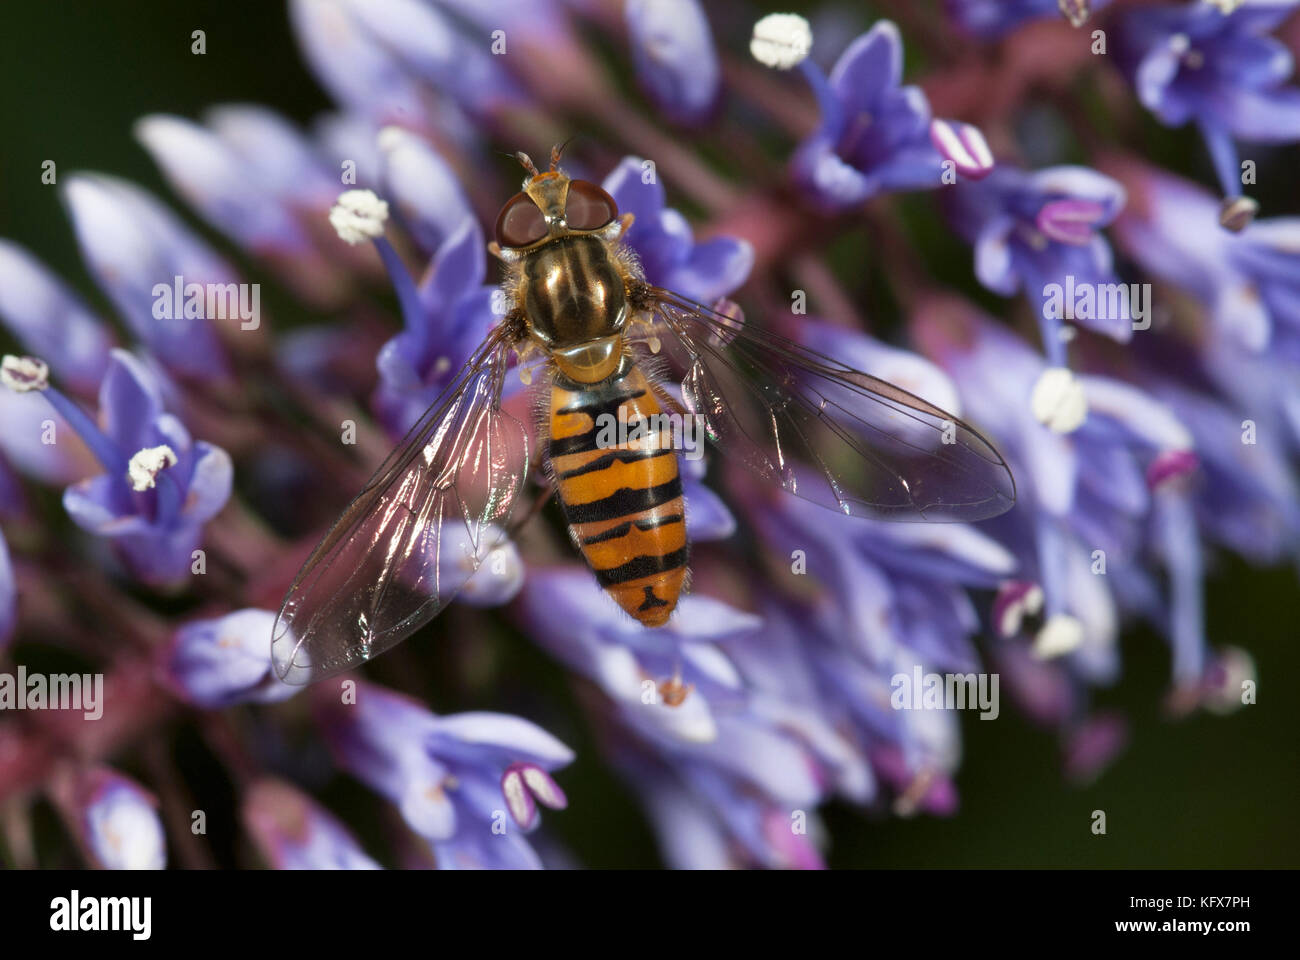 Hoverfly, Episyrphus balteatus, on Hebe Flower, purple, large compound eyes Stock Photo